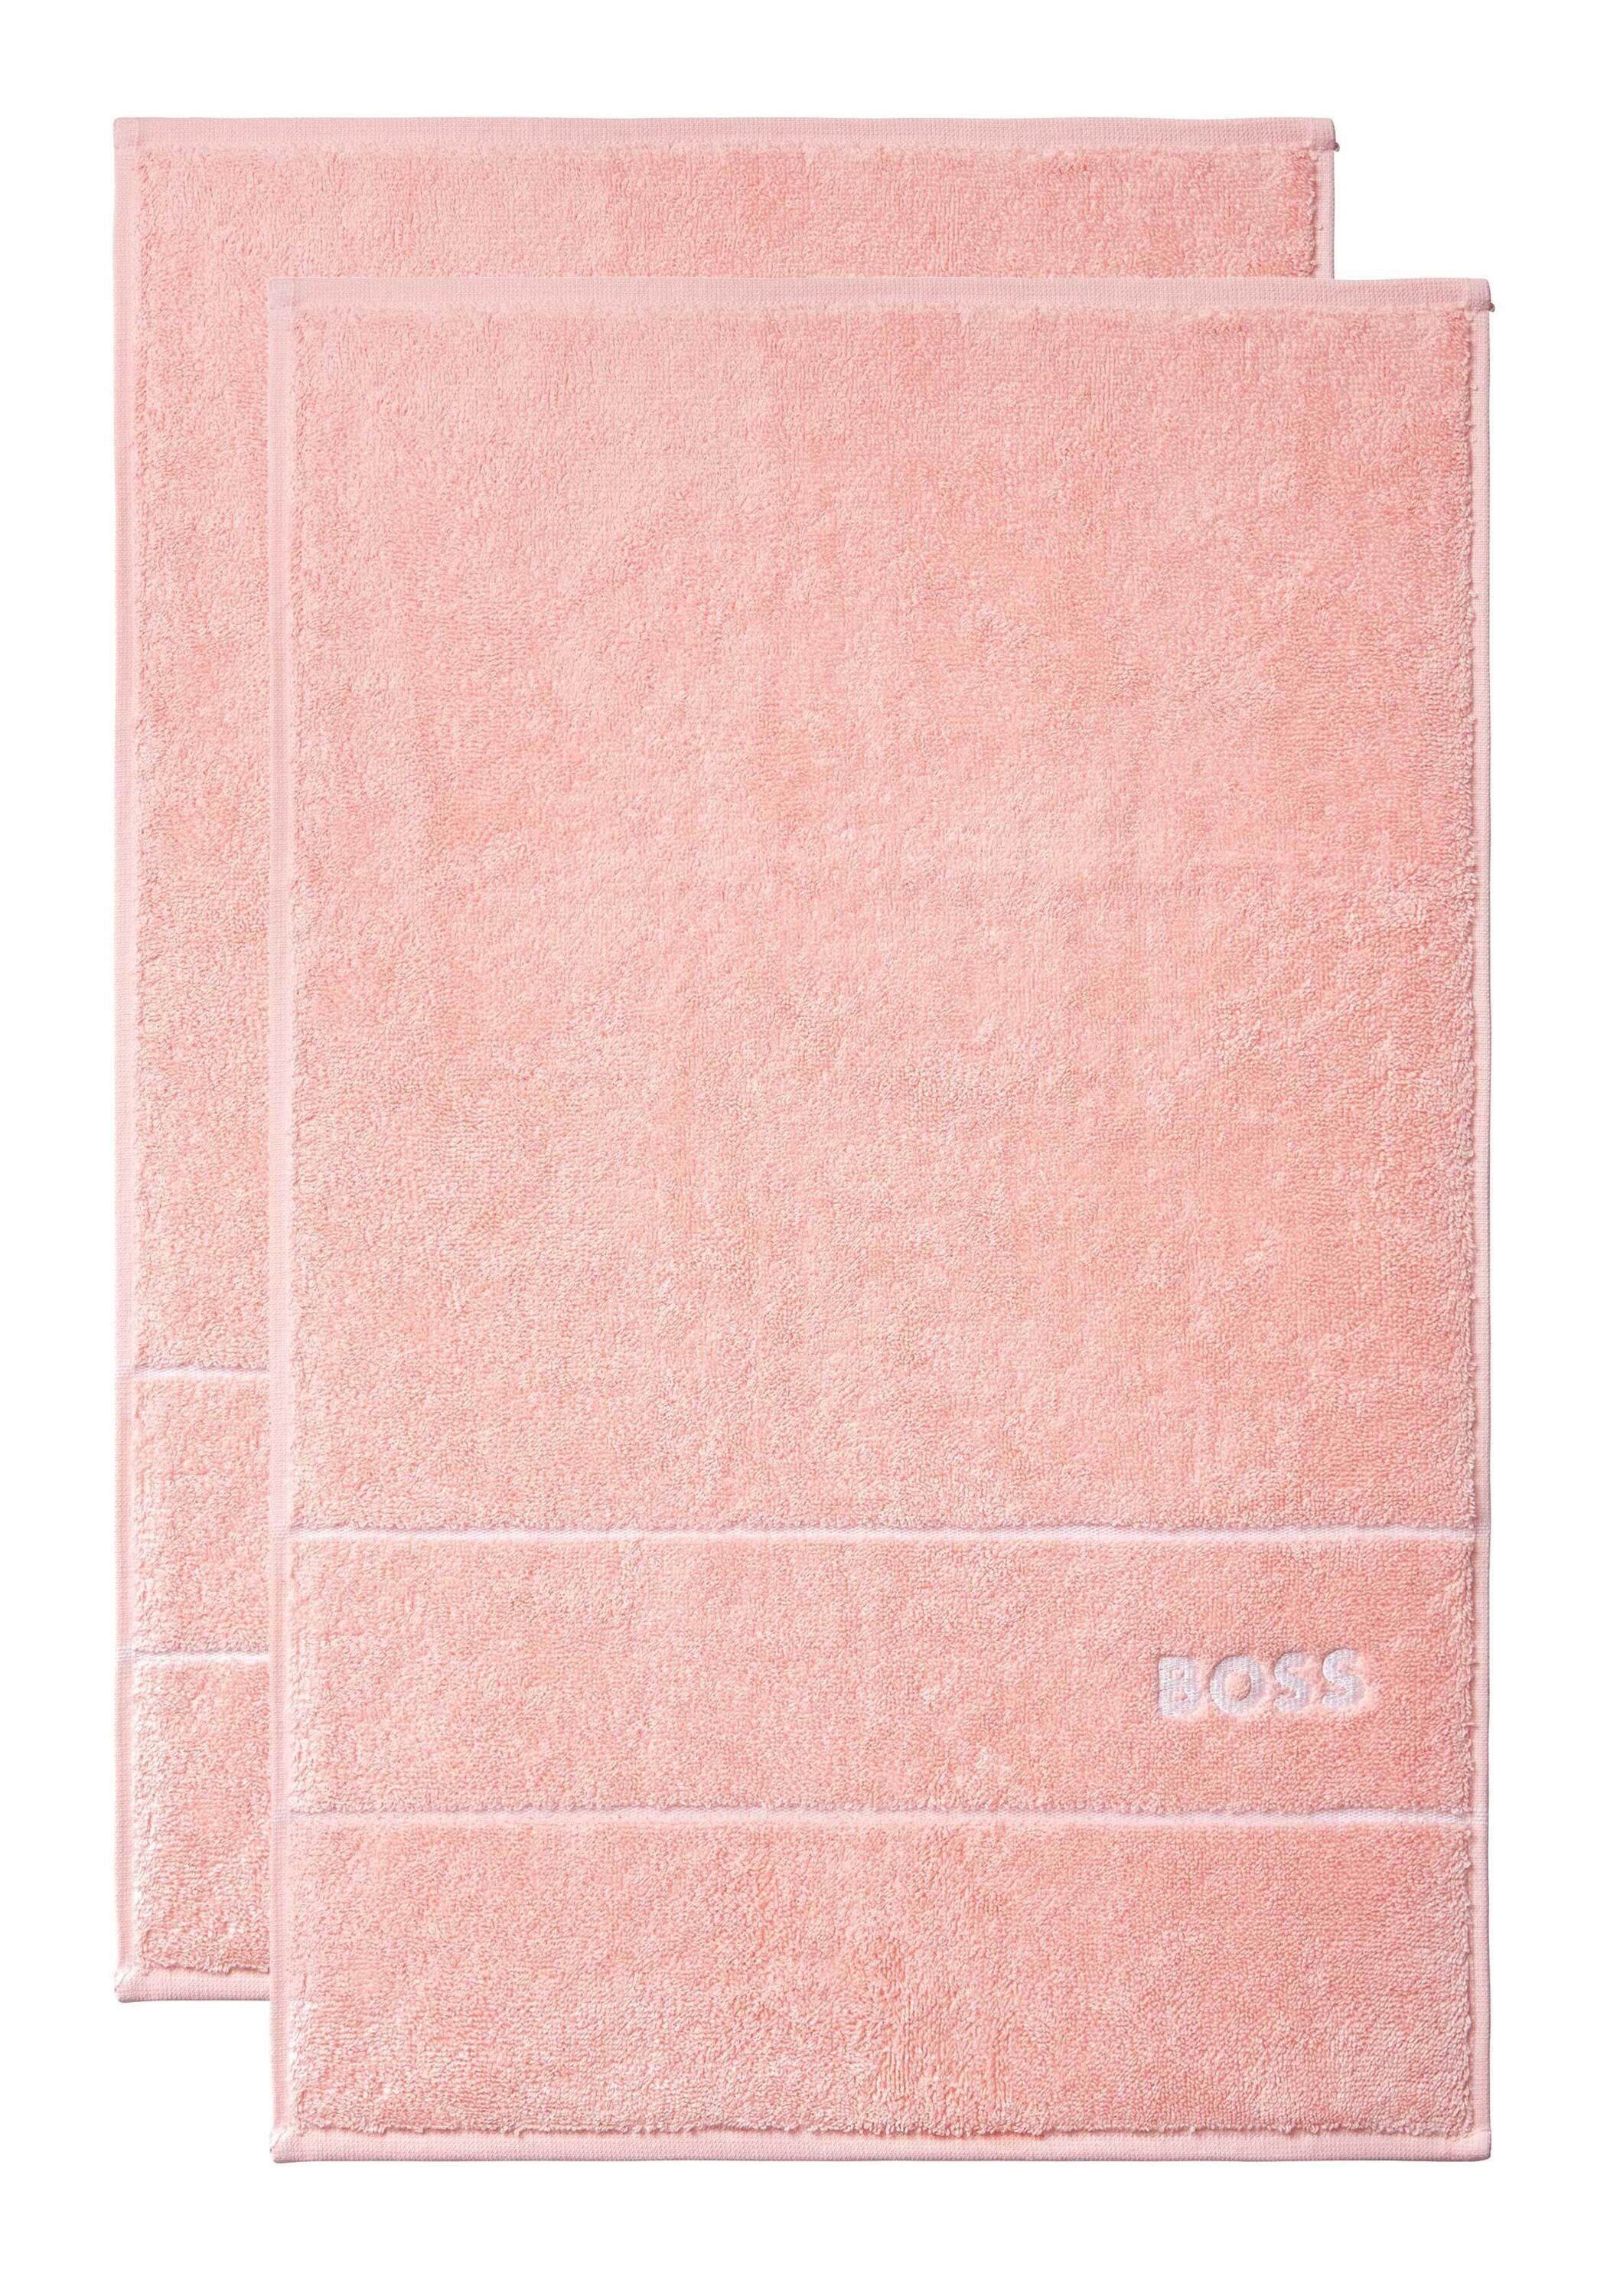 Hugo Boss Home Gästehandtücher PLAIN PRIMRON modernem Design 100% Baumwolle, (2tlg), mit